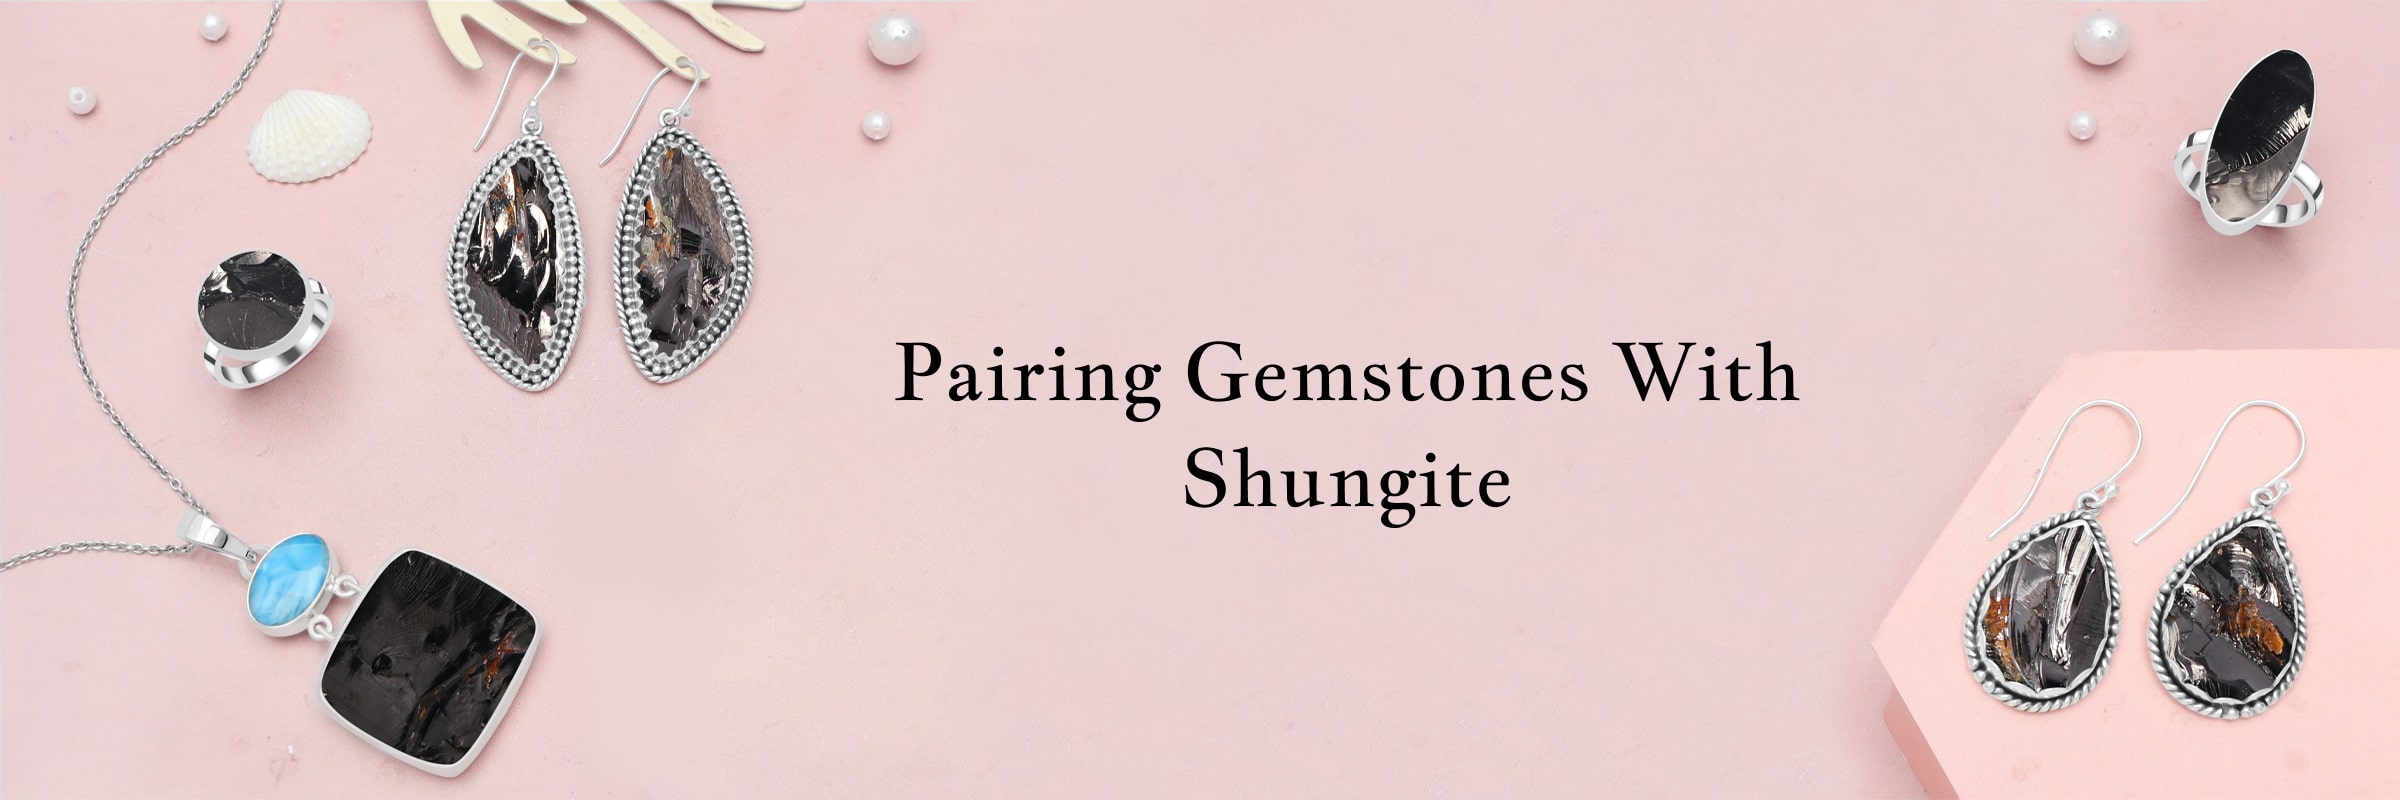 Gemstones to pair with the Shungite